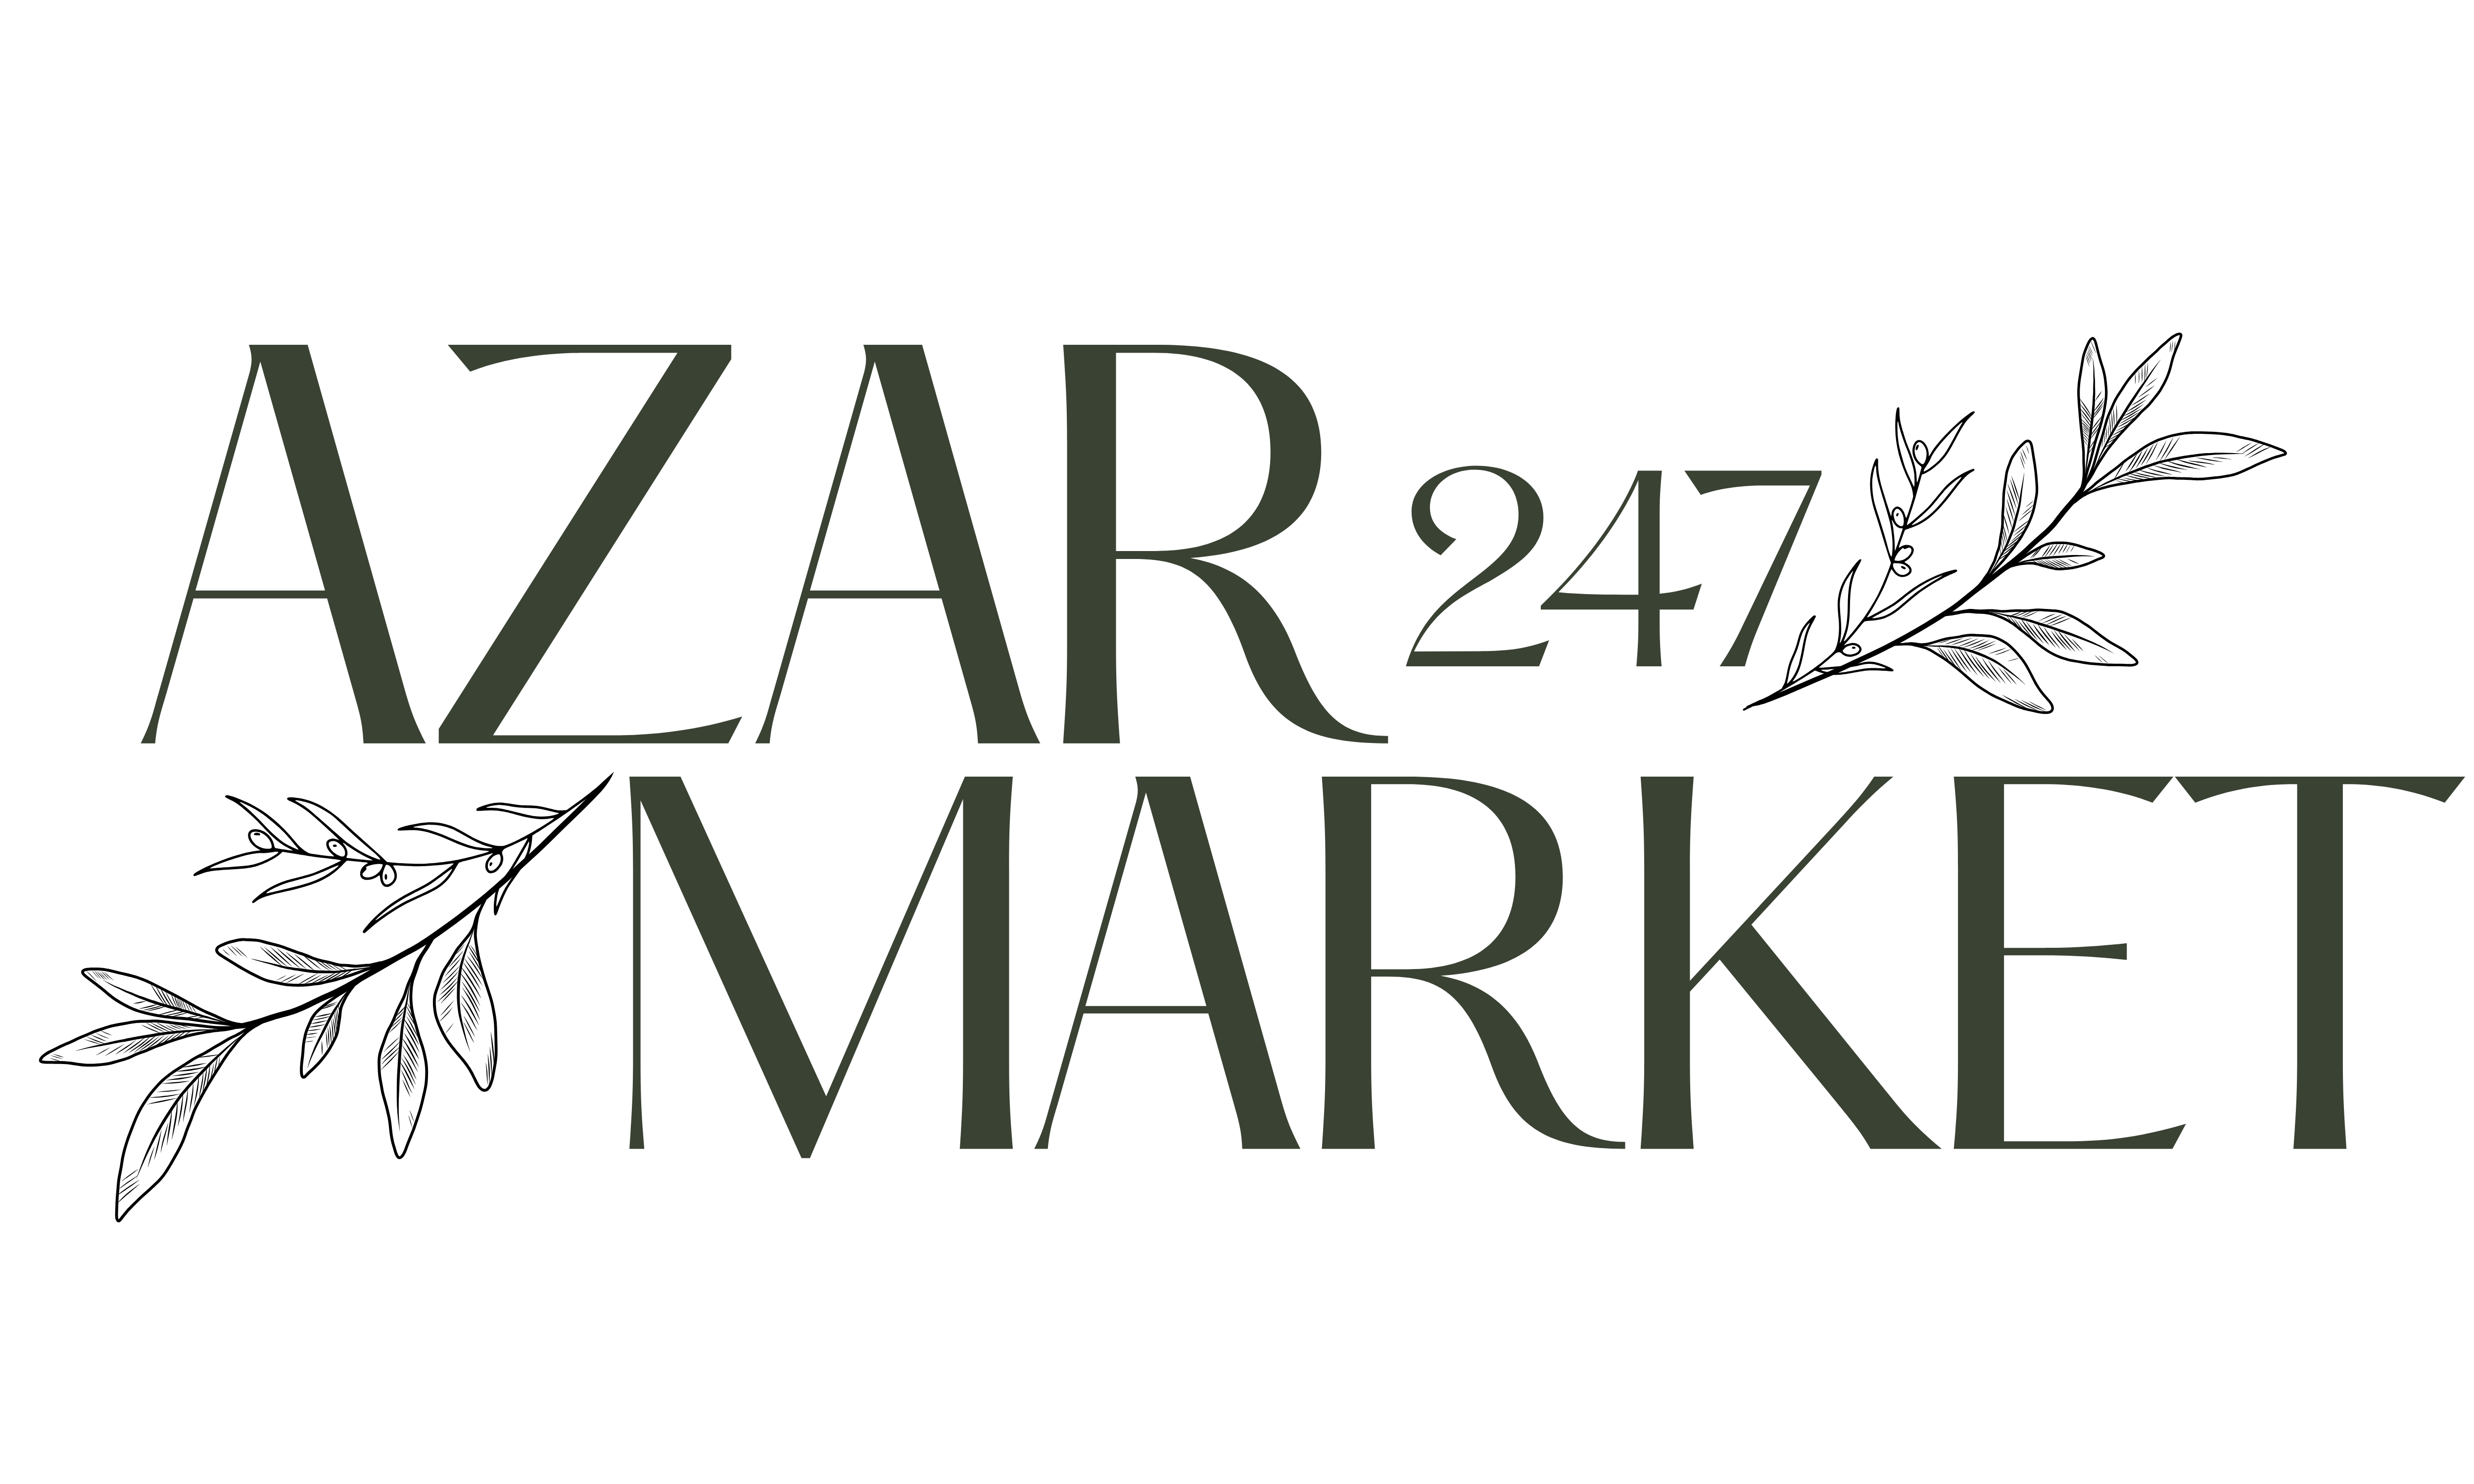 AZAR 247 Market